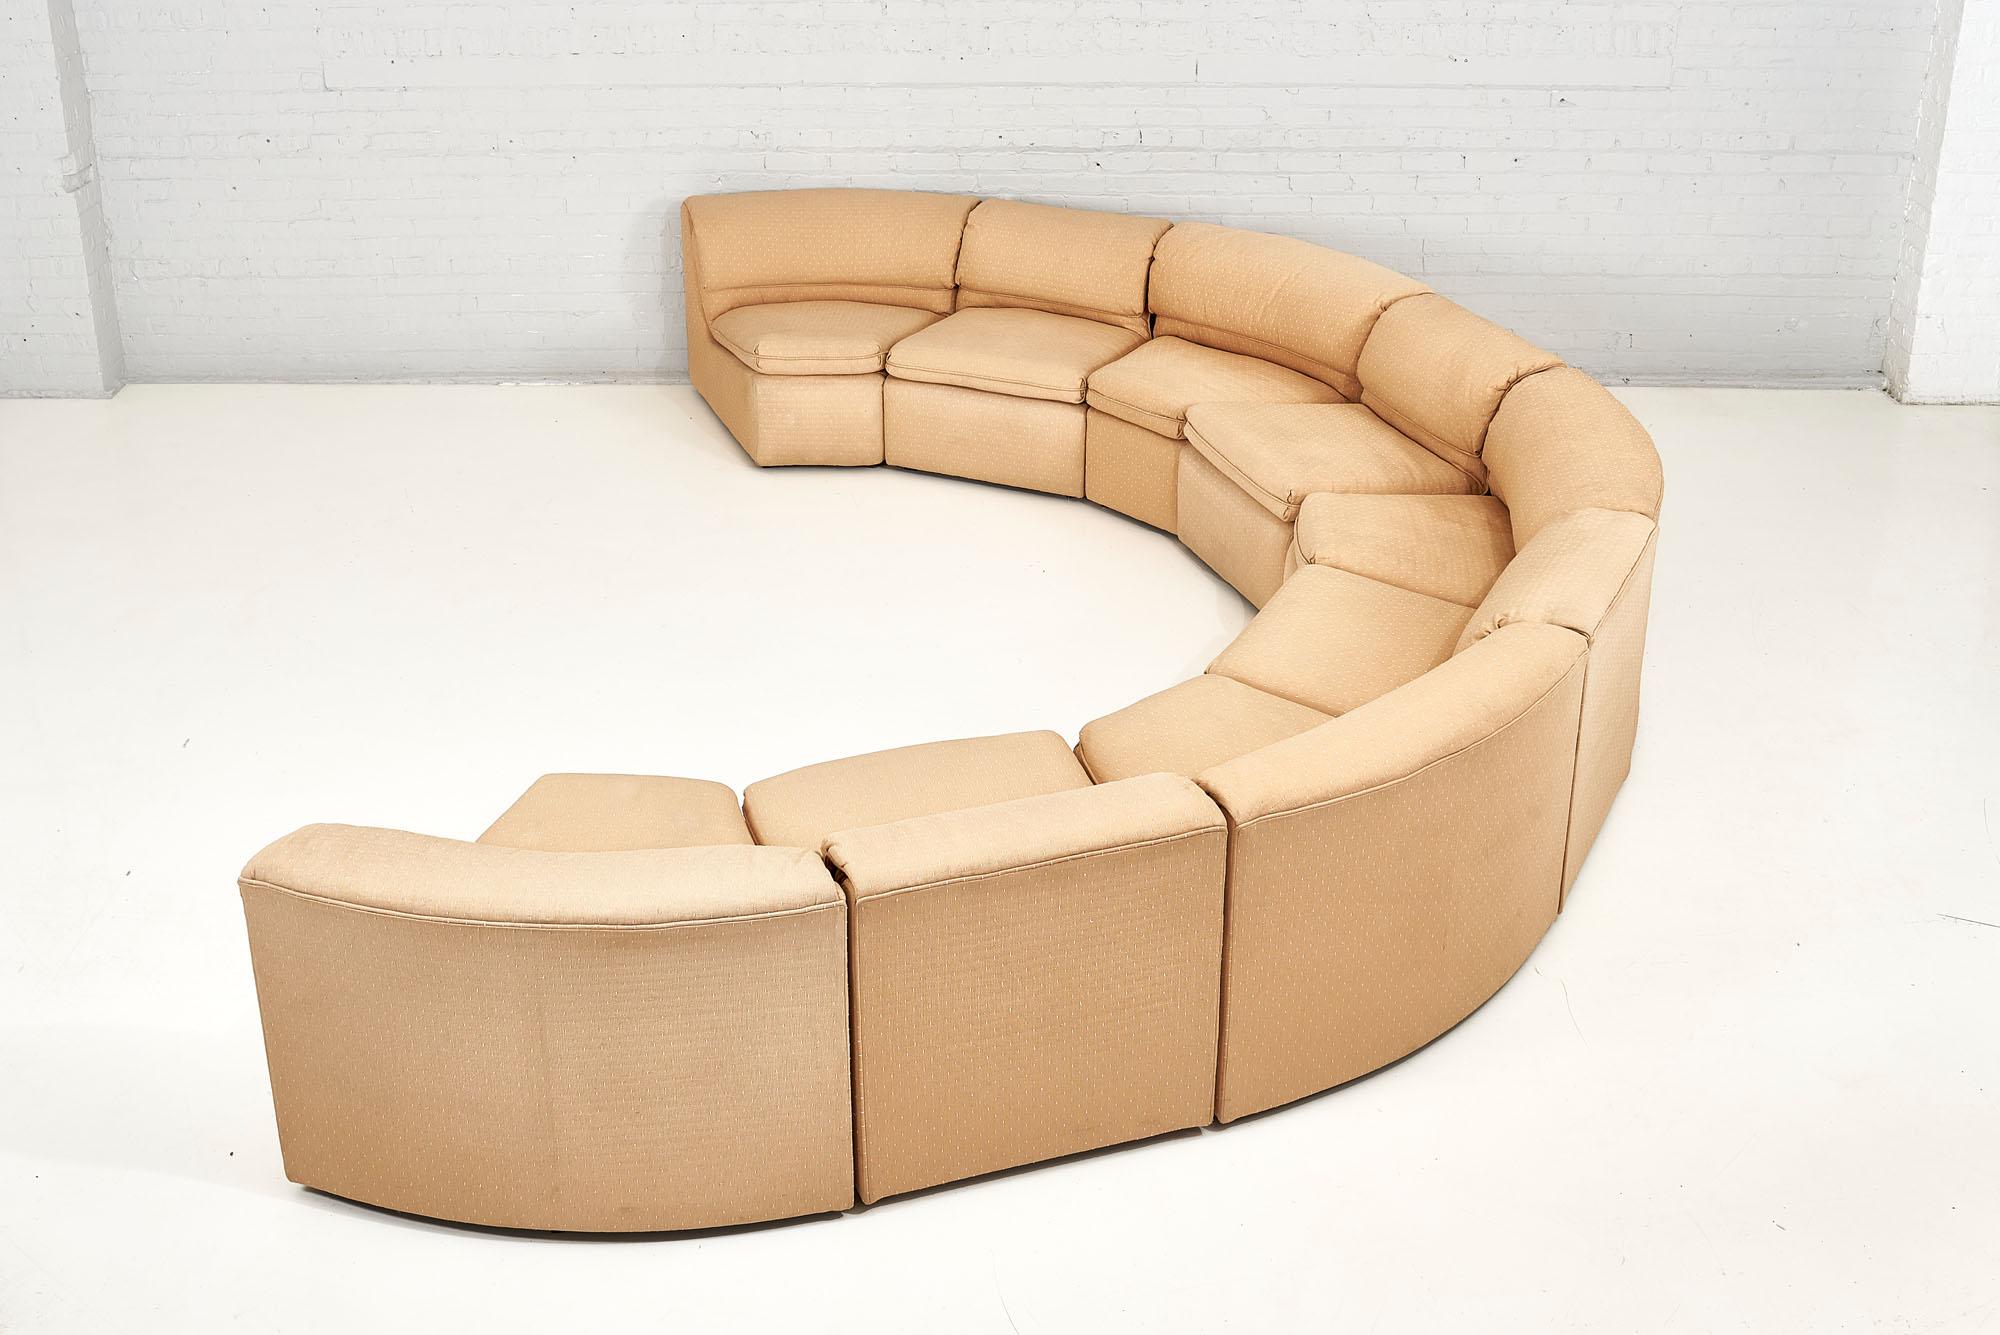 9teiliges modulares Halb-Circle-Sofa, 1970 (Postmoderne)